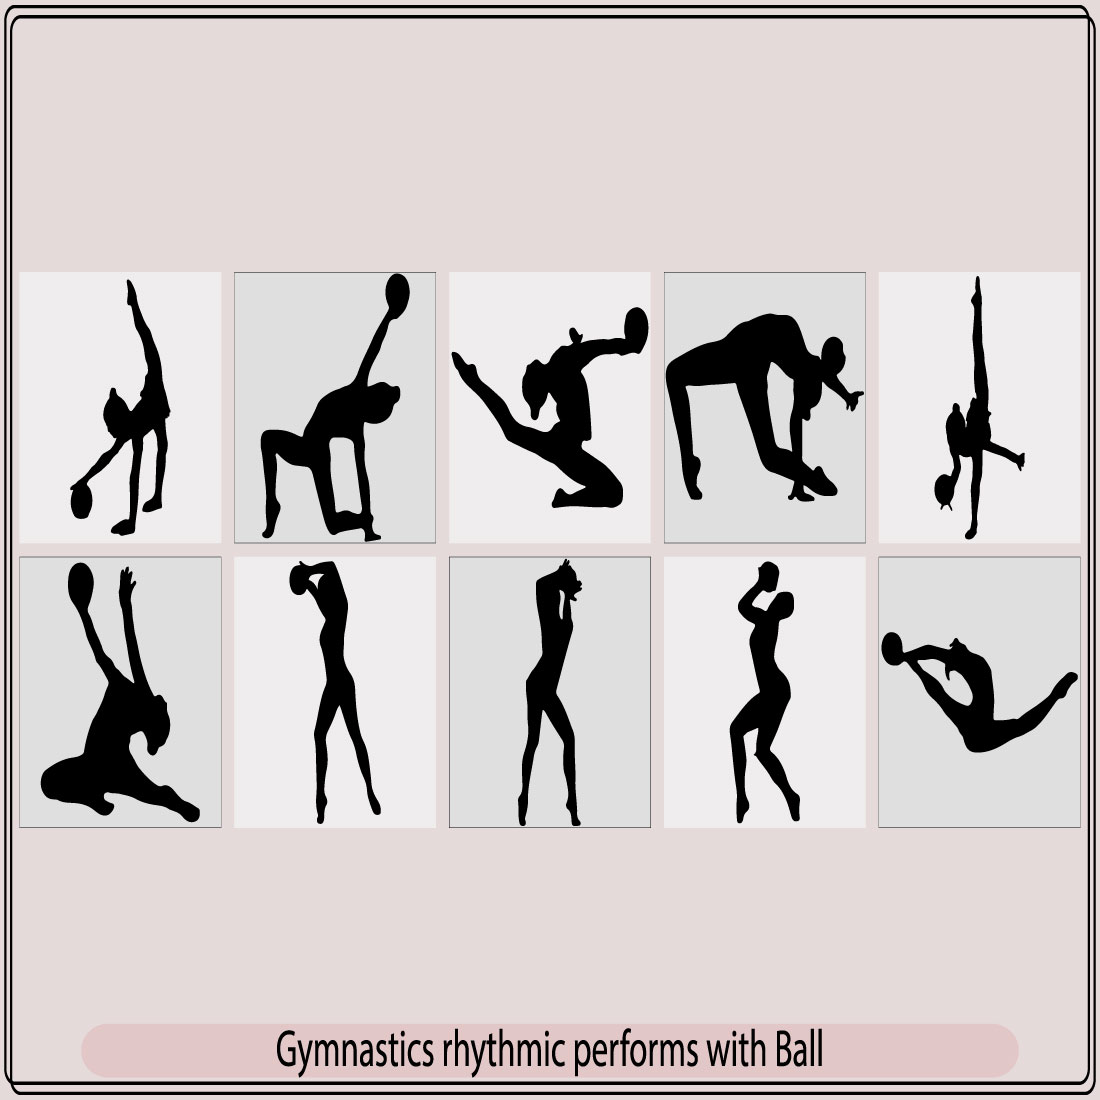 https://masterbundles.com/wp-content/uploads/2023/04/gymnastics-rhythmic-performs-with-ballmb-preview-image-2-495.jpg